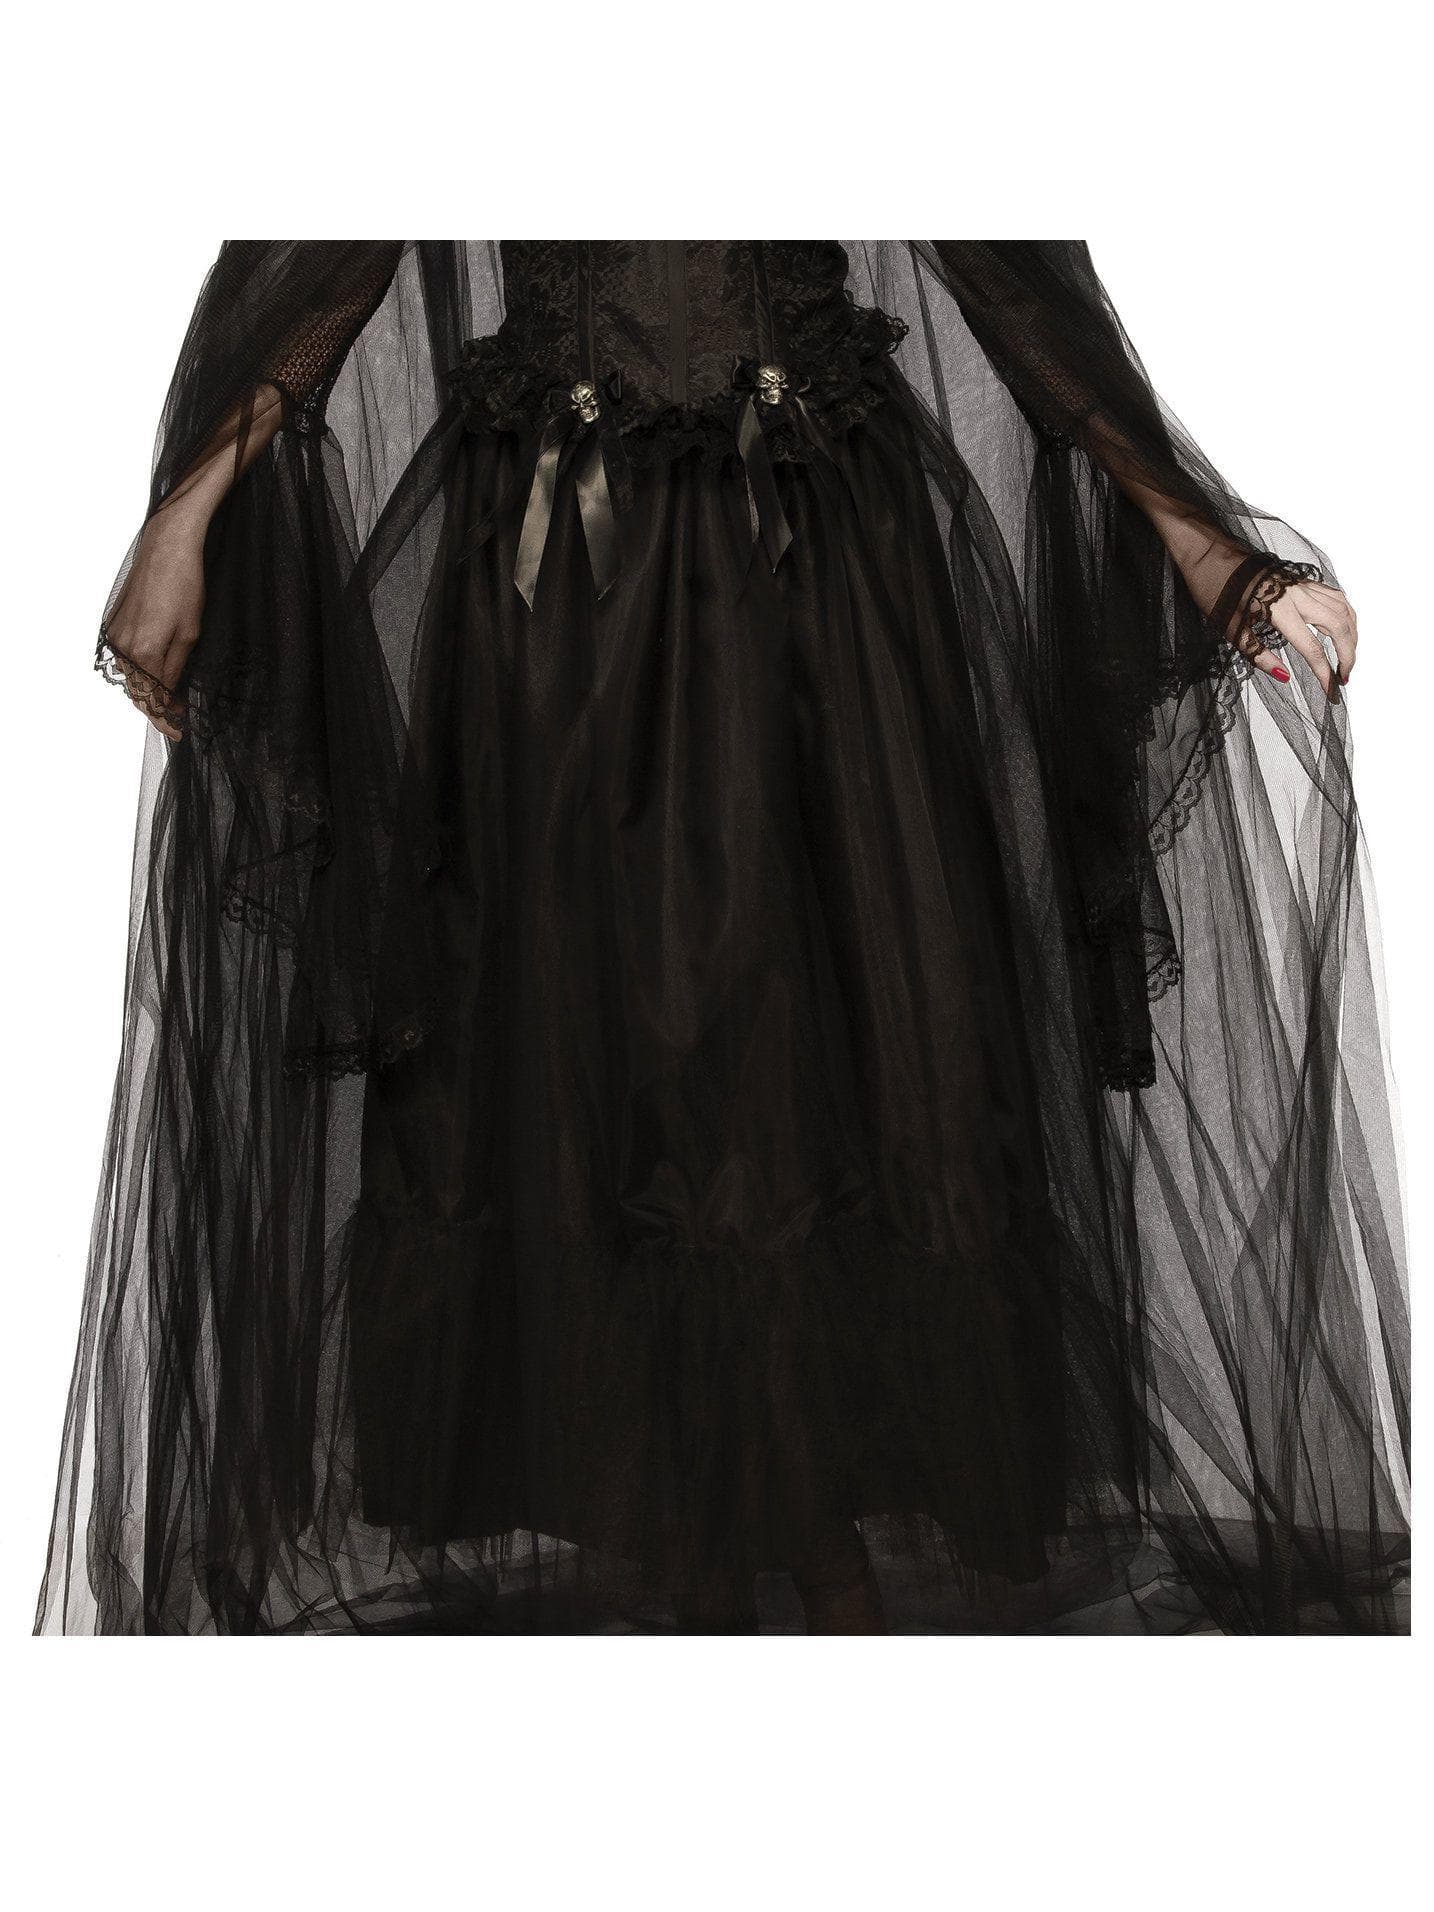 Soulless Skirt - costumes.com